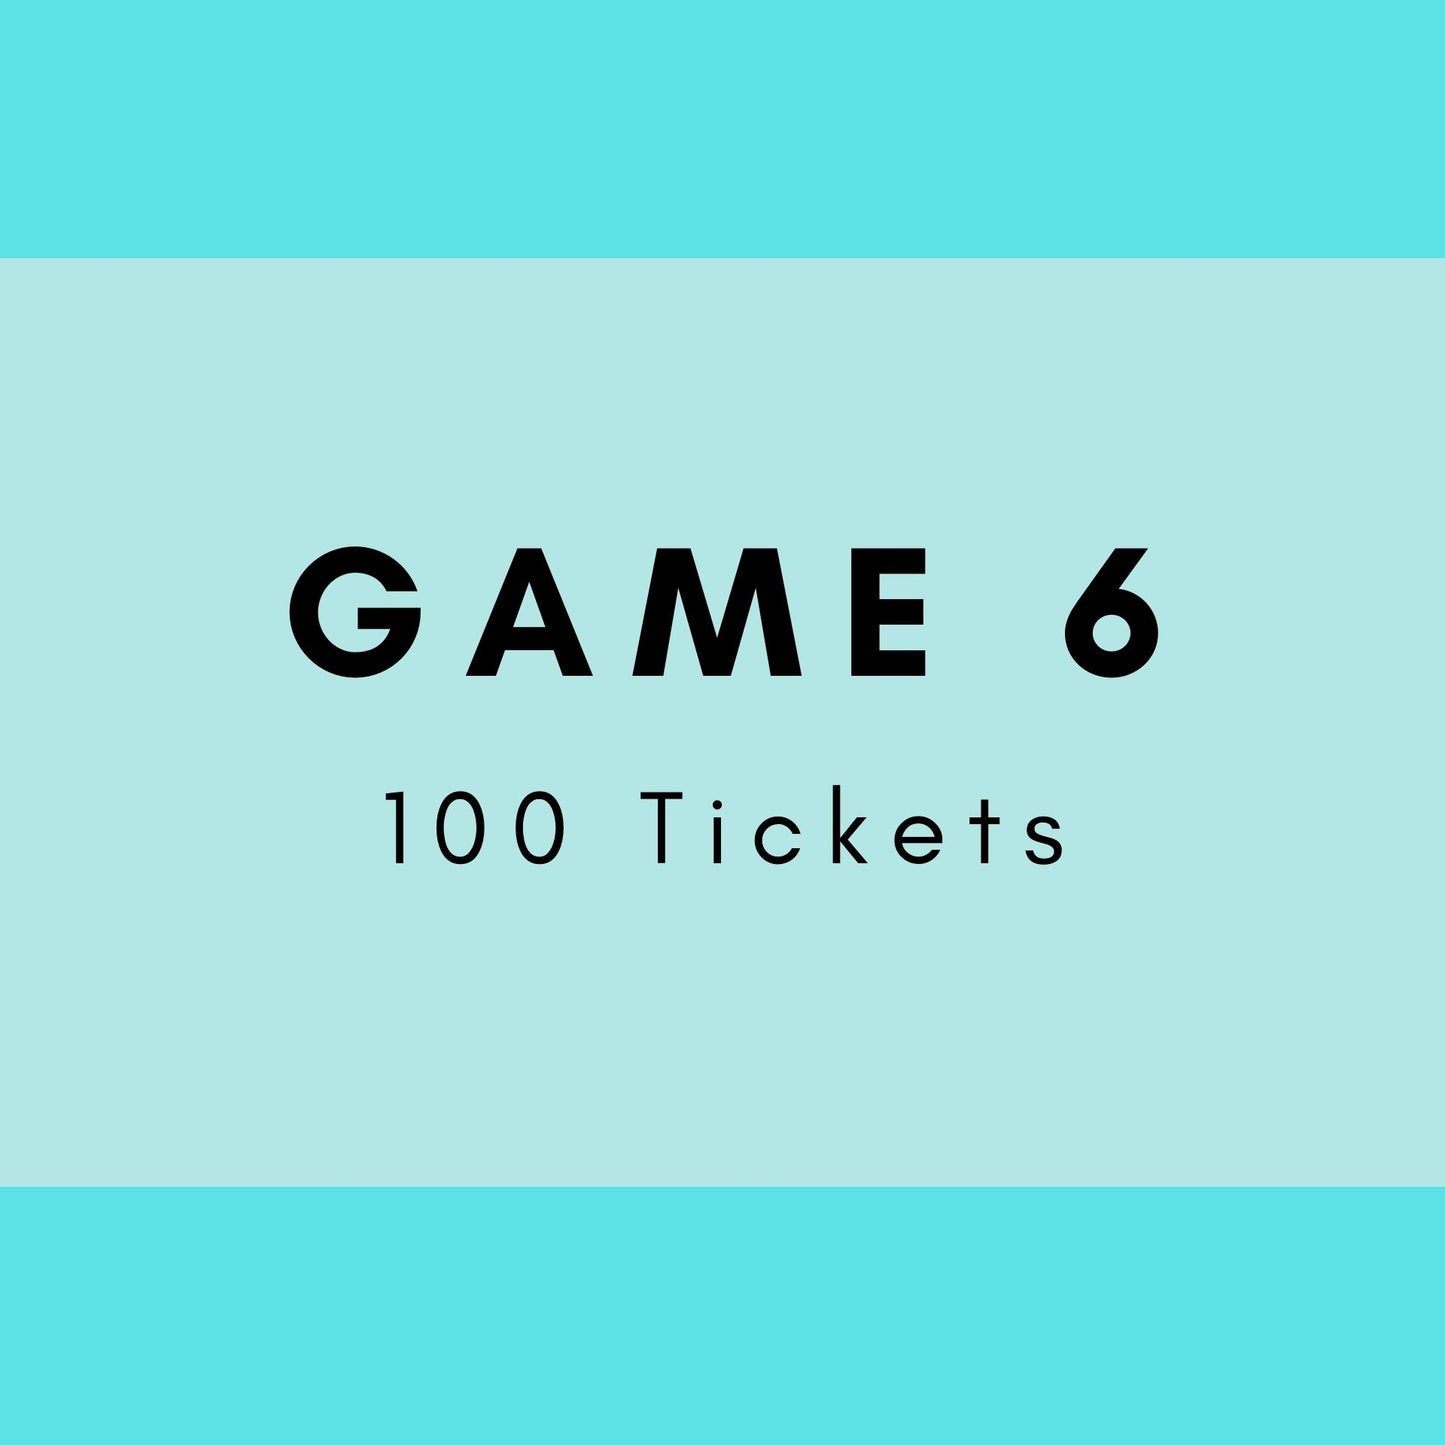 Game 6 | Boogie Bingo | Printable Music Bingo Tickets